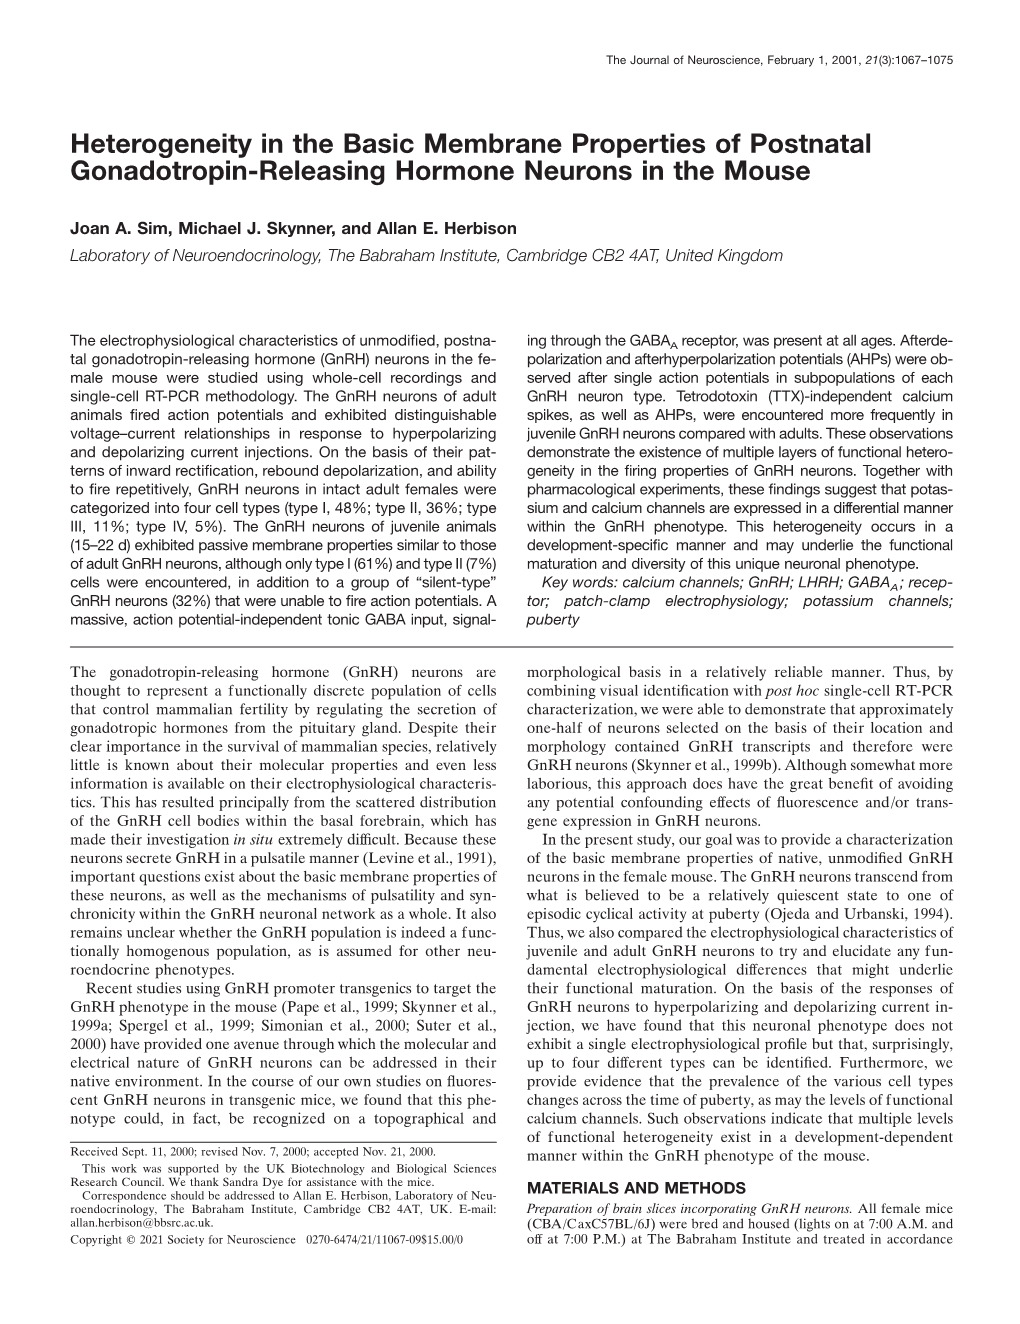 Heterogeneity in the Basic Membrane Properties of Postnatal Gonadotropin-Releasing Hormone Neurons in the Mouse